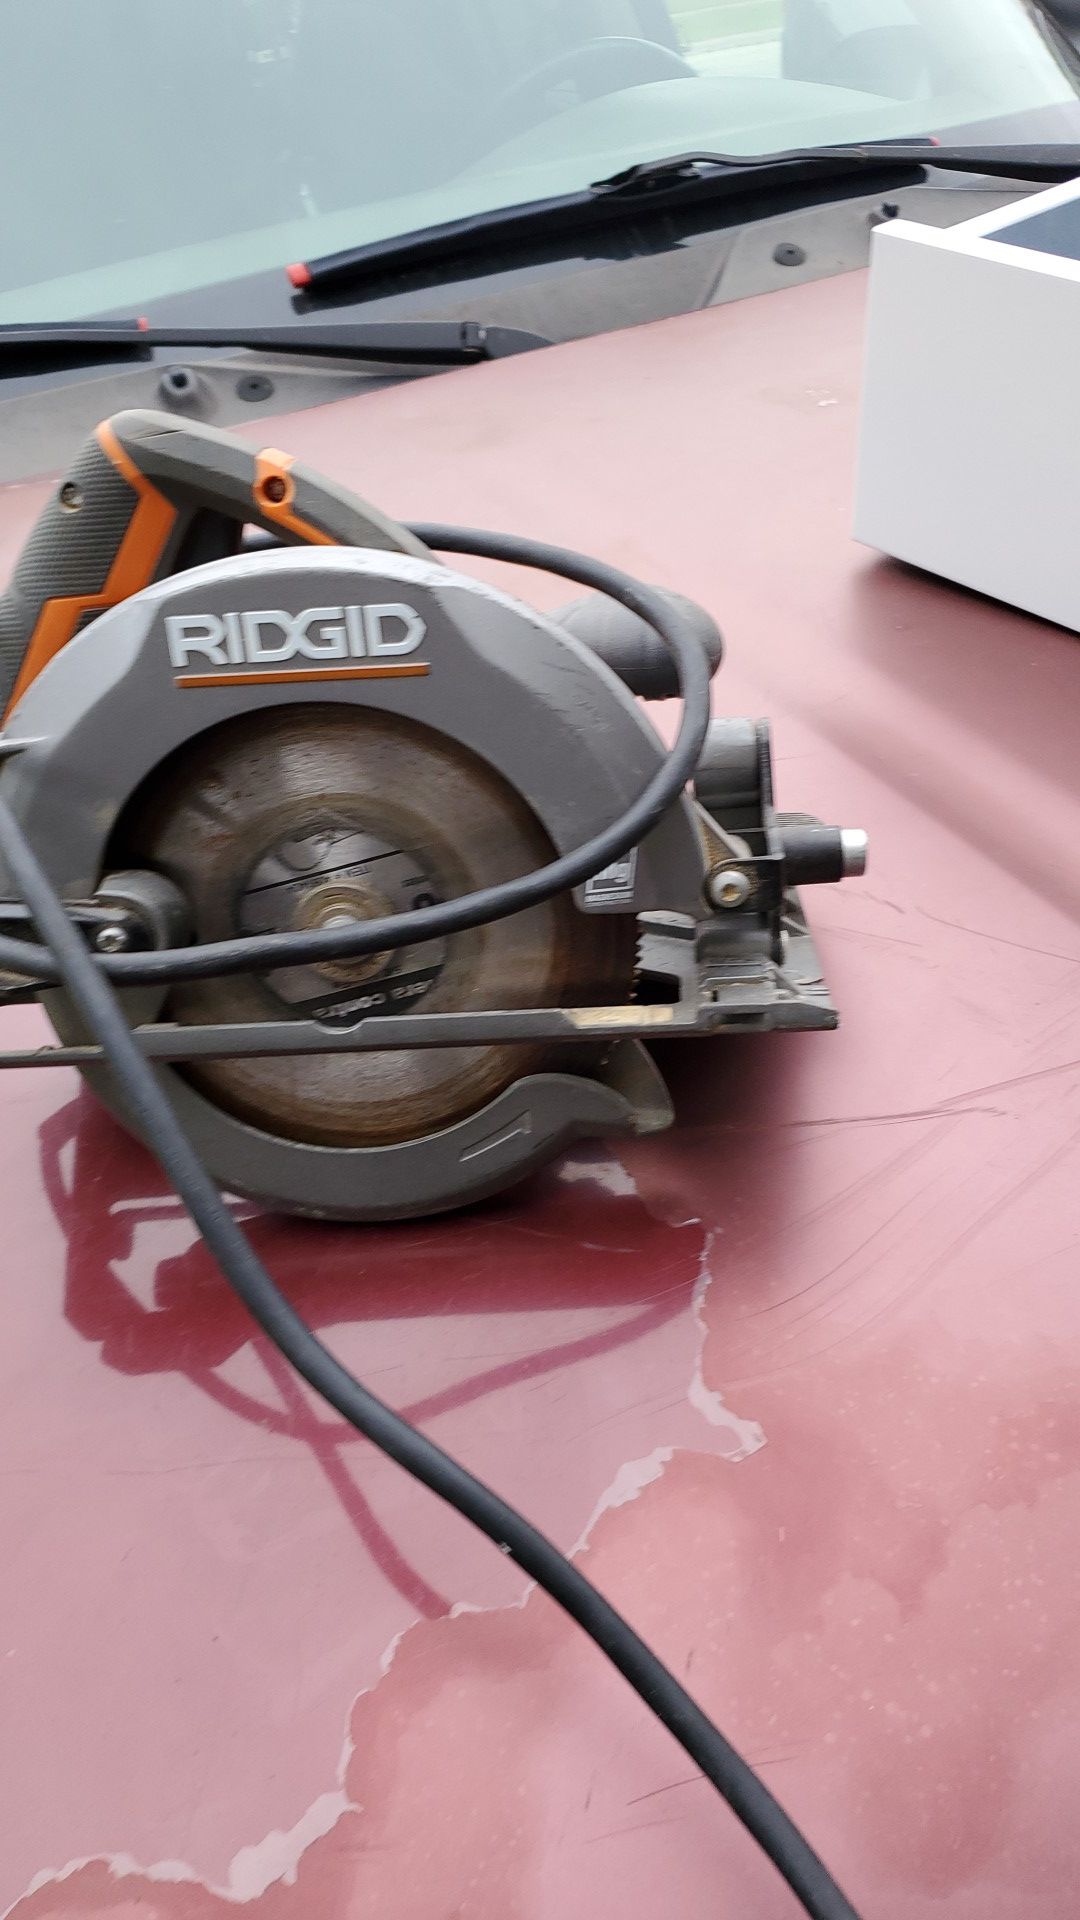 Rigid corded circular saw